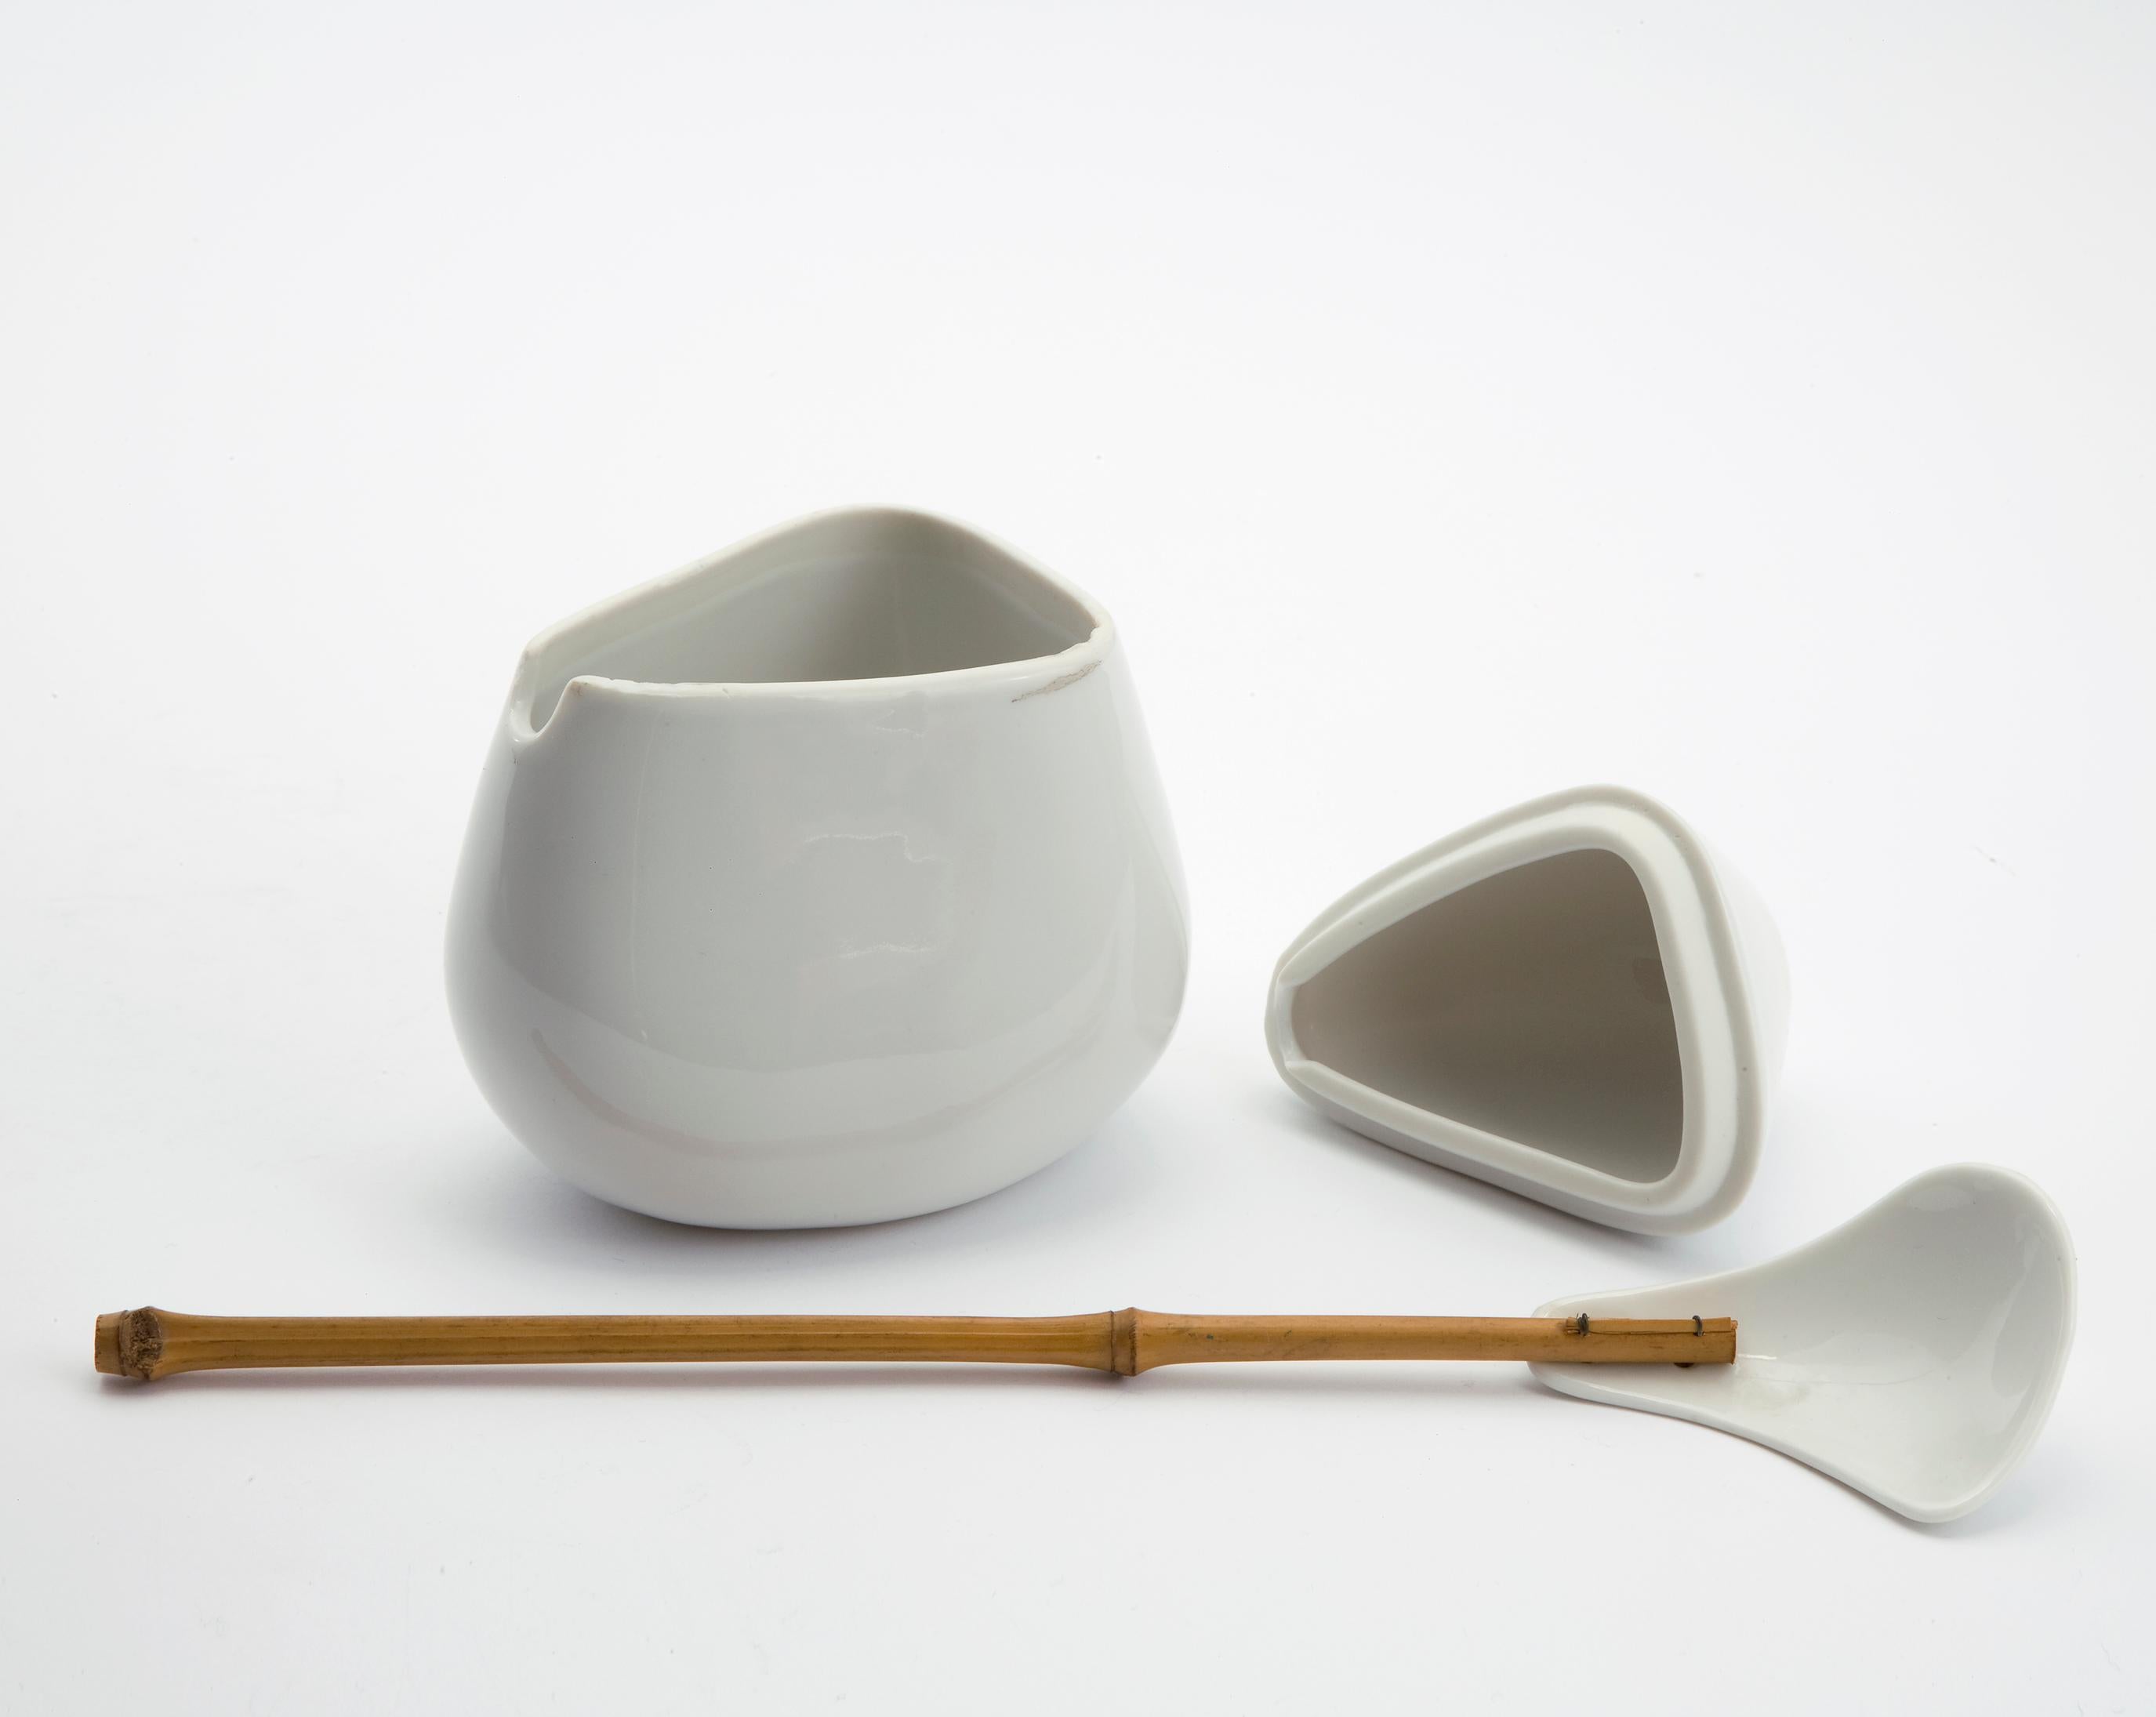 Japanese White Porcelain Sugar Bowl with Long Handled Spoon by La Gardo Tackett, 1950s